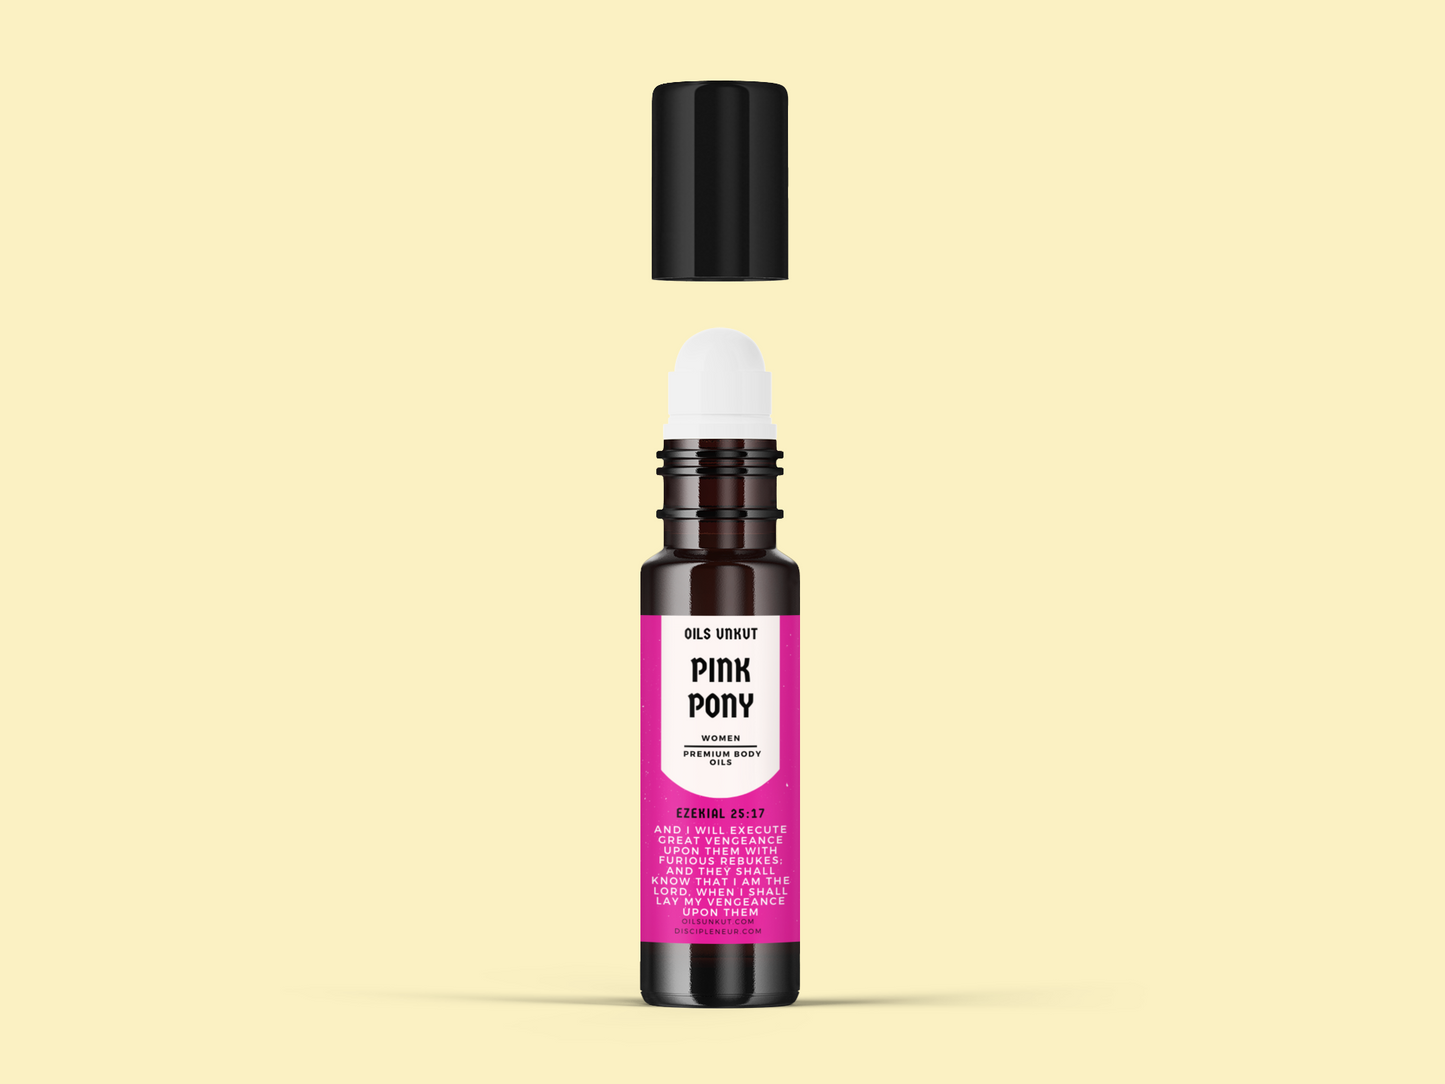 Pink Pony Body Oil For Women